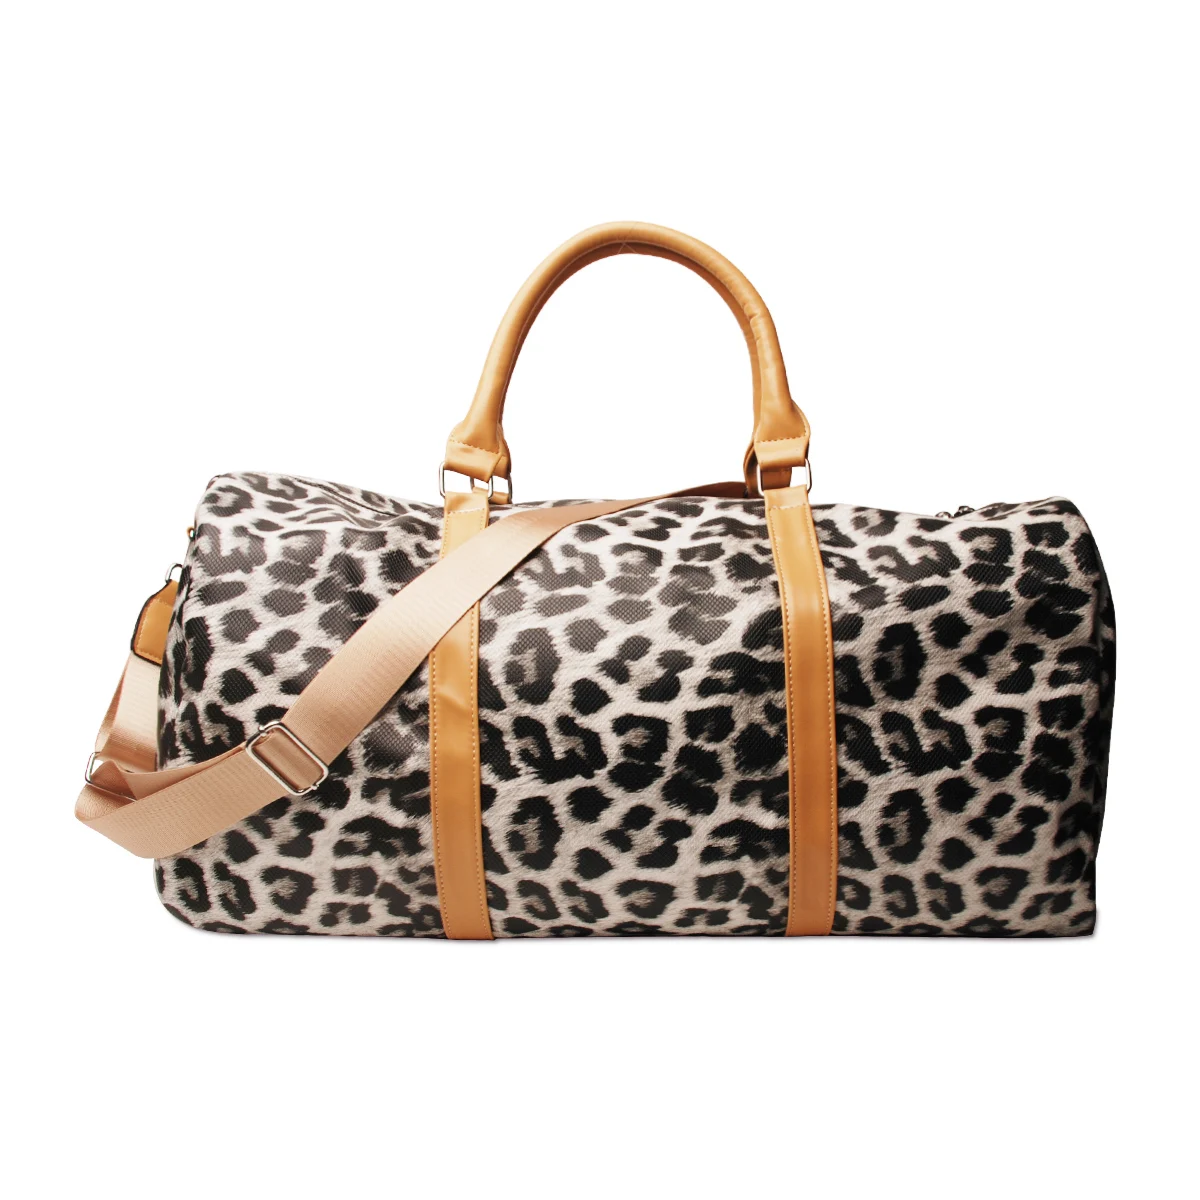 

DOMIL PU Leopard Weekend Travel Tote Bag Extra Large Size Purse Leopard Design Duffle Endless Handbag for Women